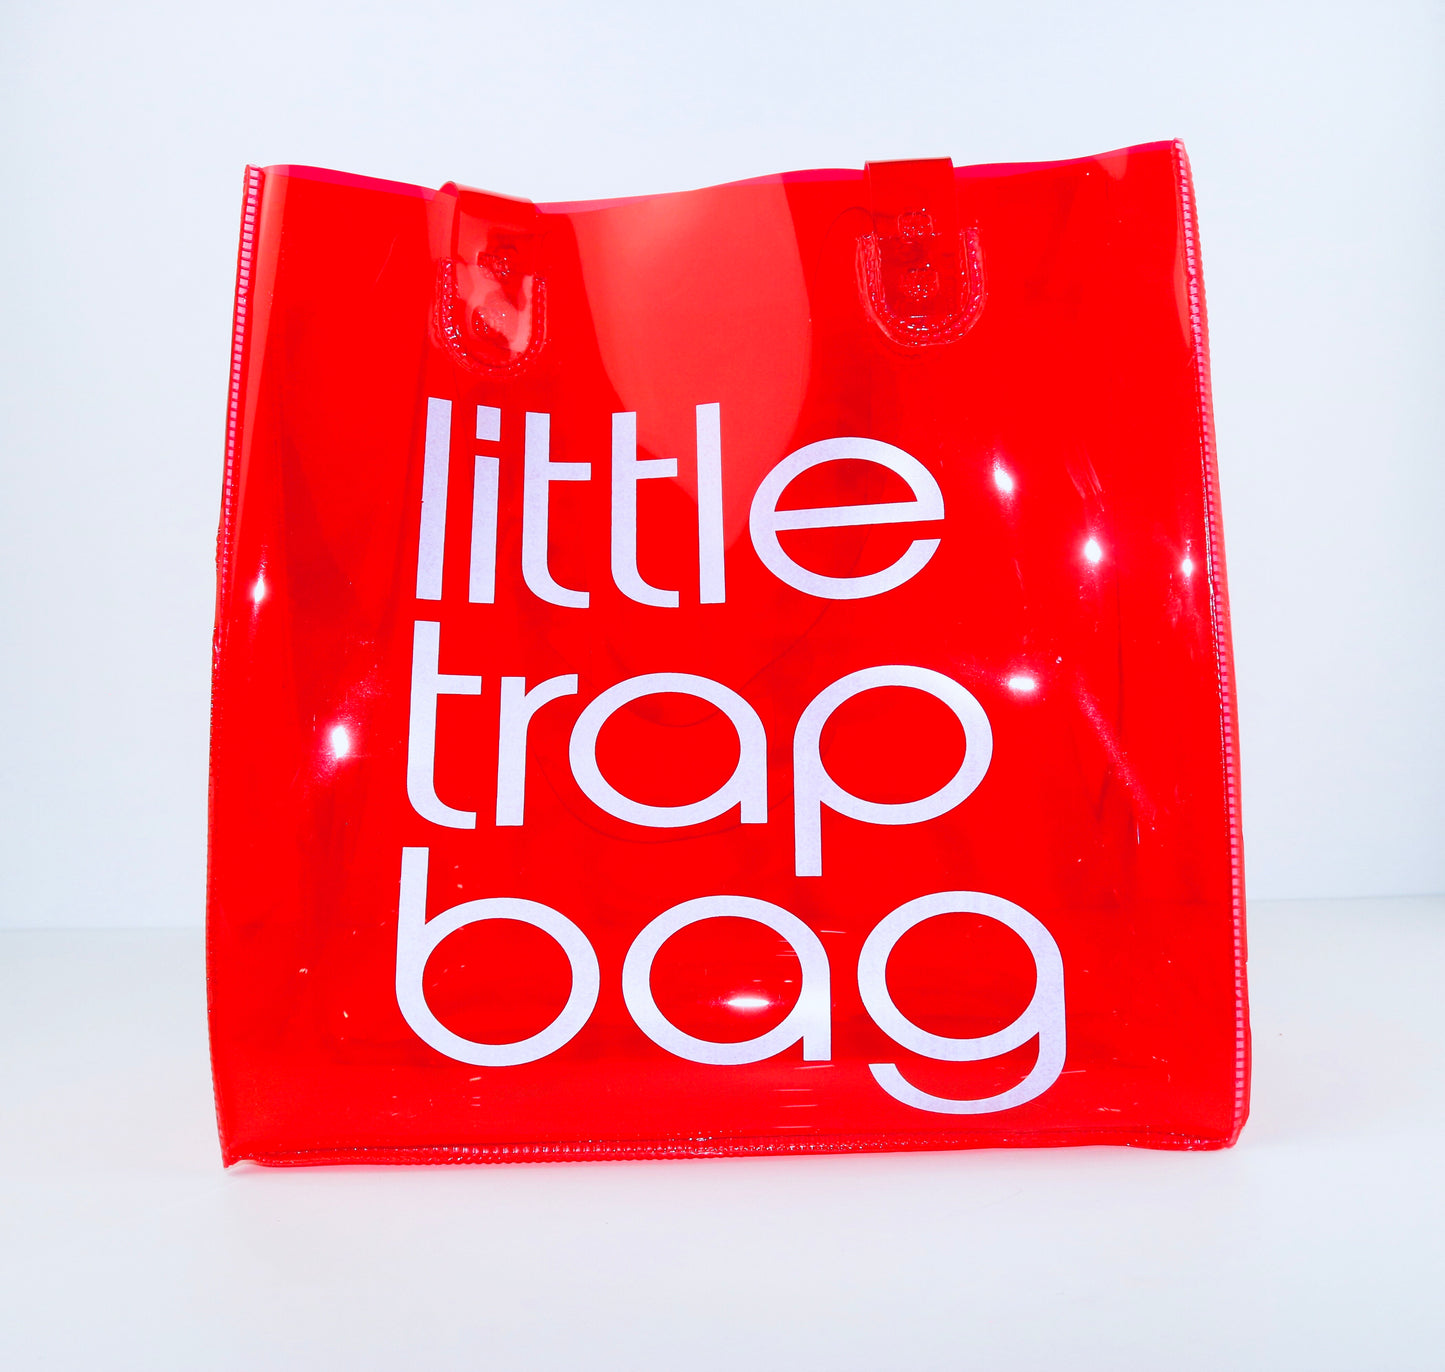 “Red rage” little trap bag